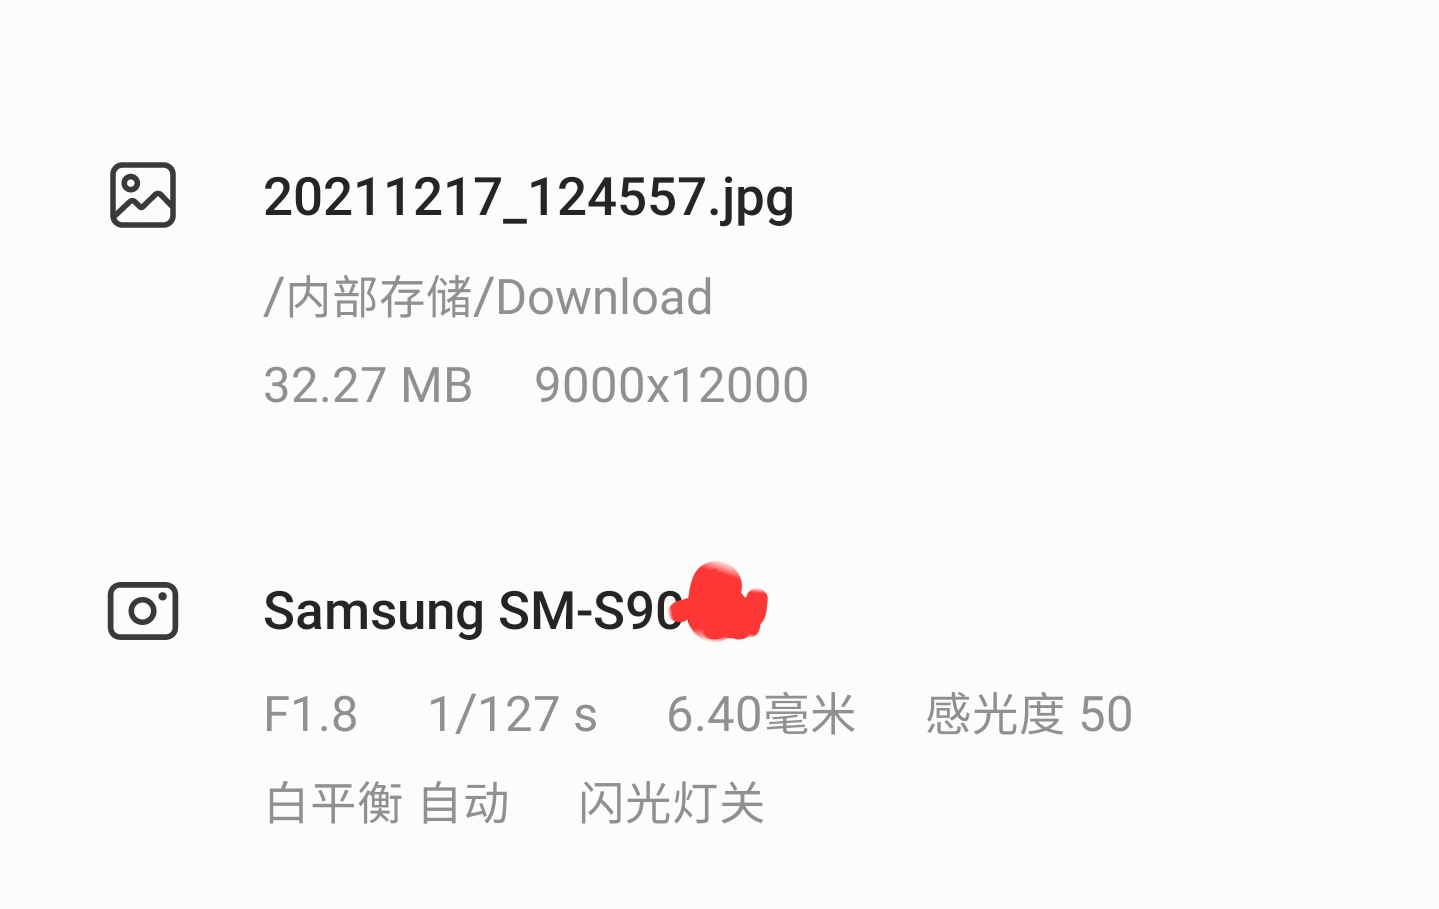 Samsung Galaxy S22 Super Resolution Photo 2